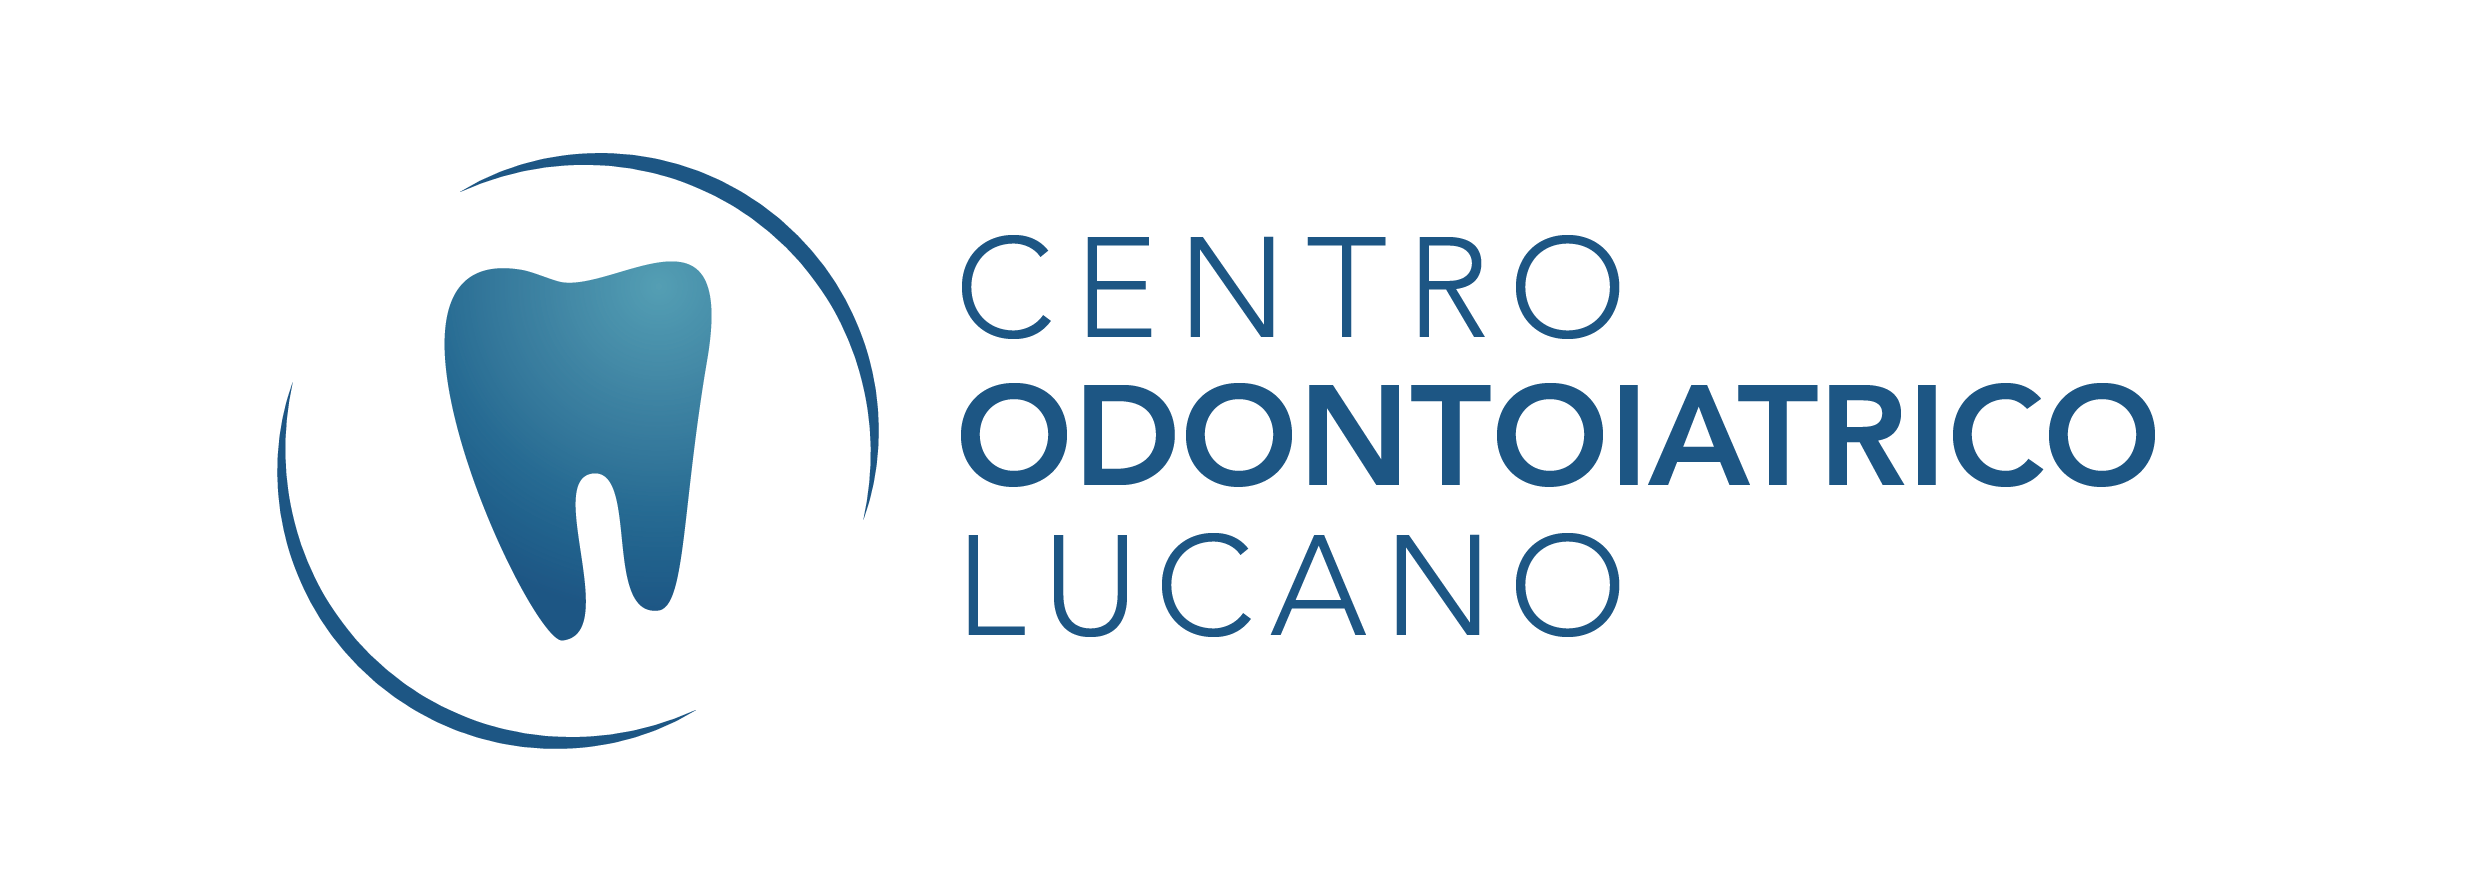 Centro Odontoiatrico Lucano